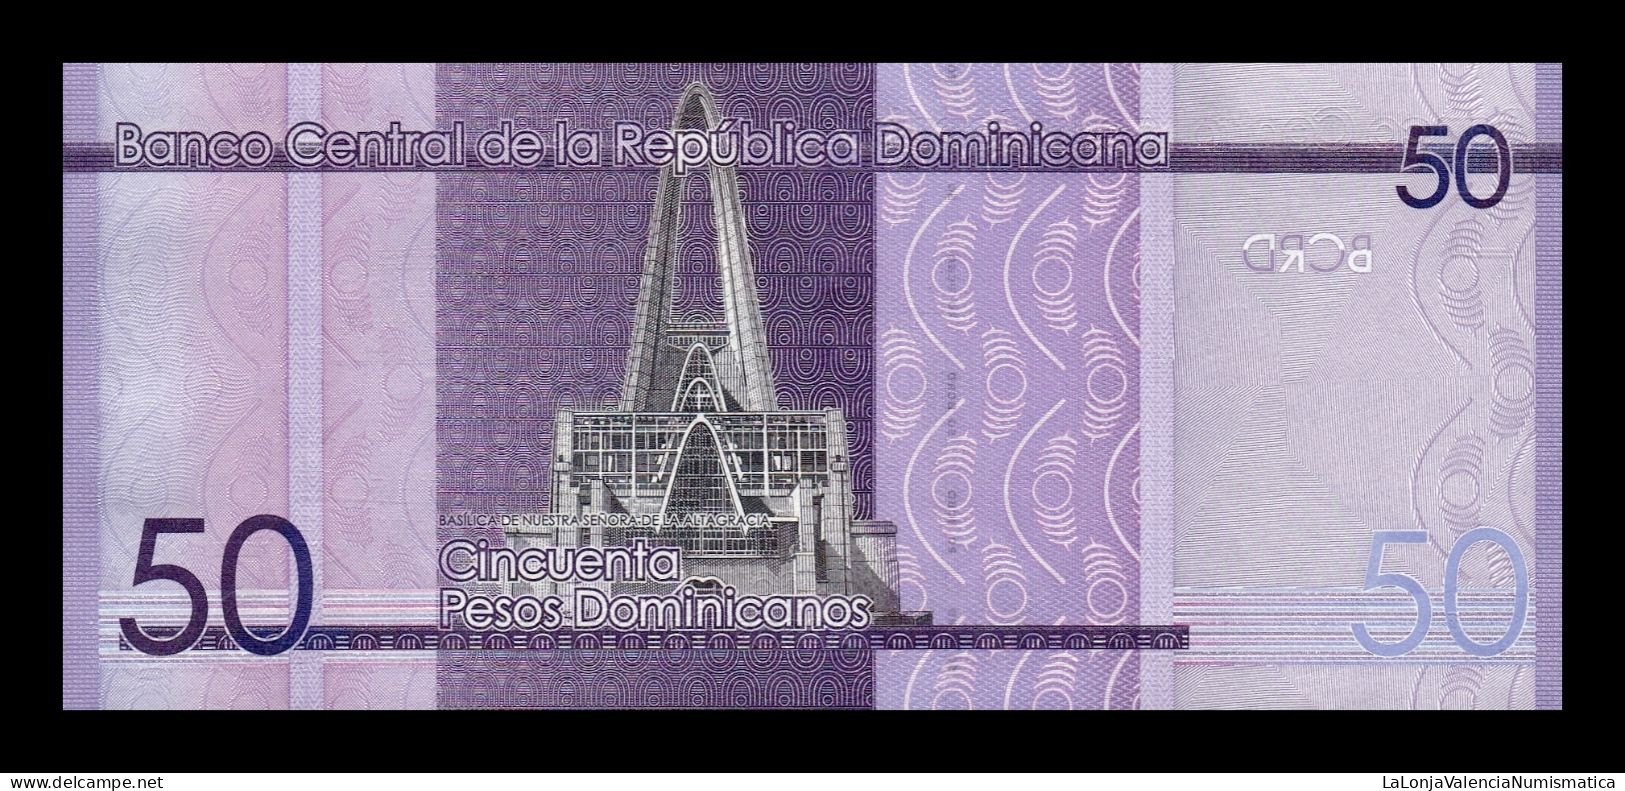 República Dominicana 50 Pesos Dominicanos 2016 Pick 189c Low Serial 146 Sc Unc - Dominicana